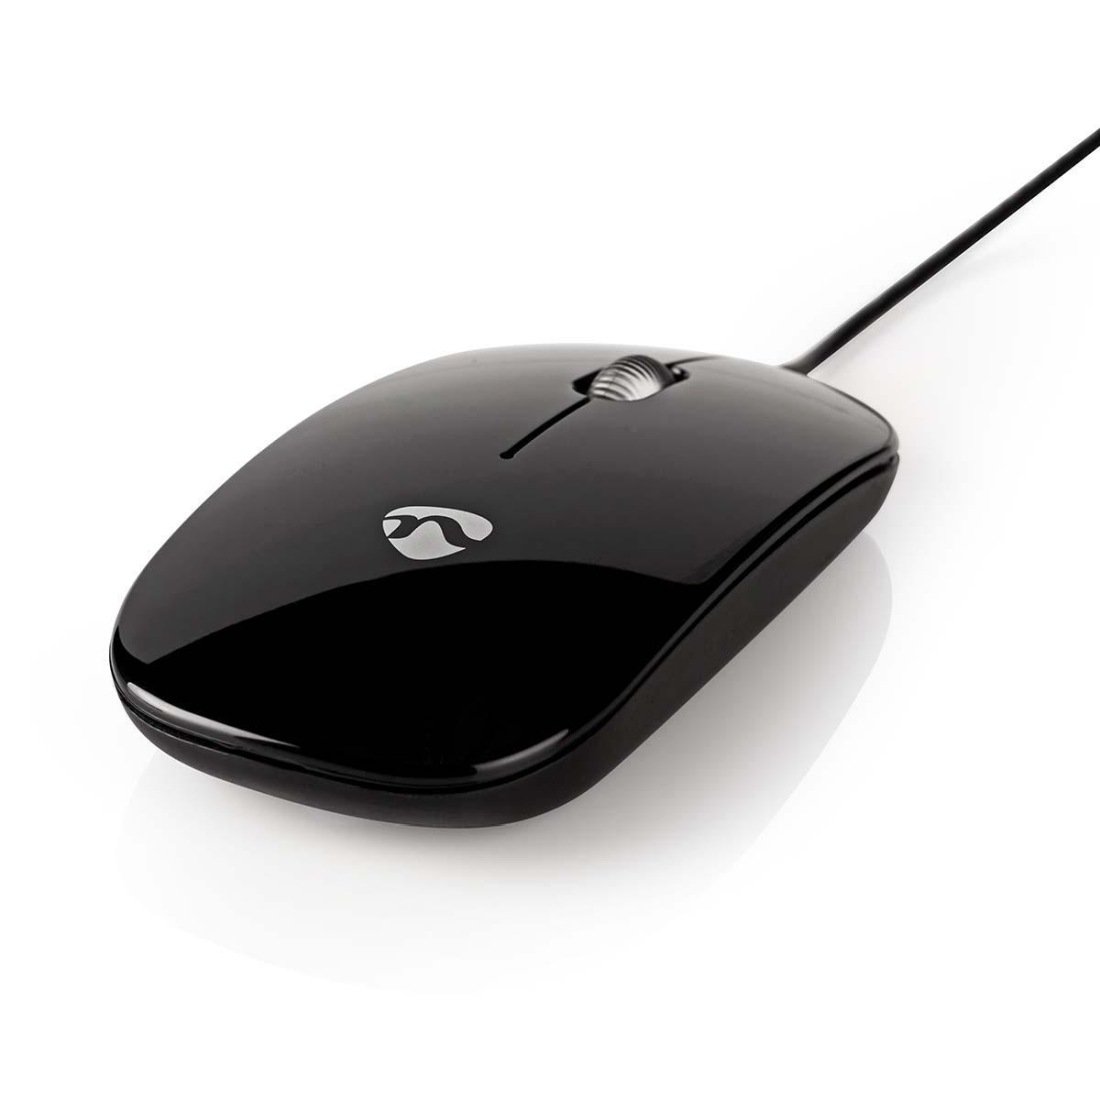 Optická myš MSWD200BK, černá